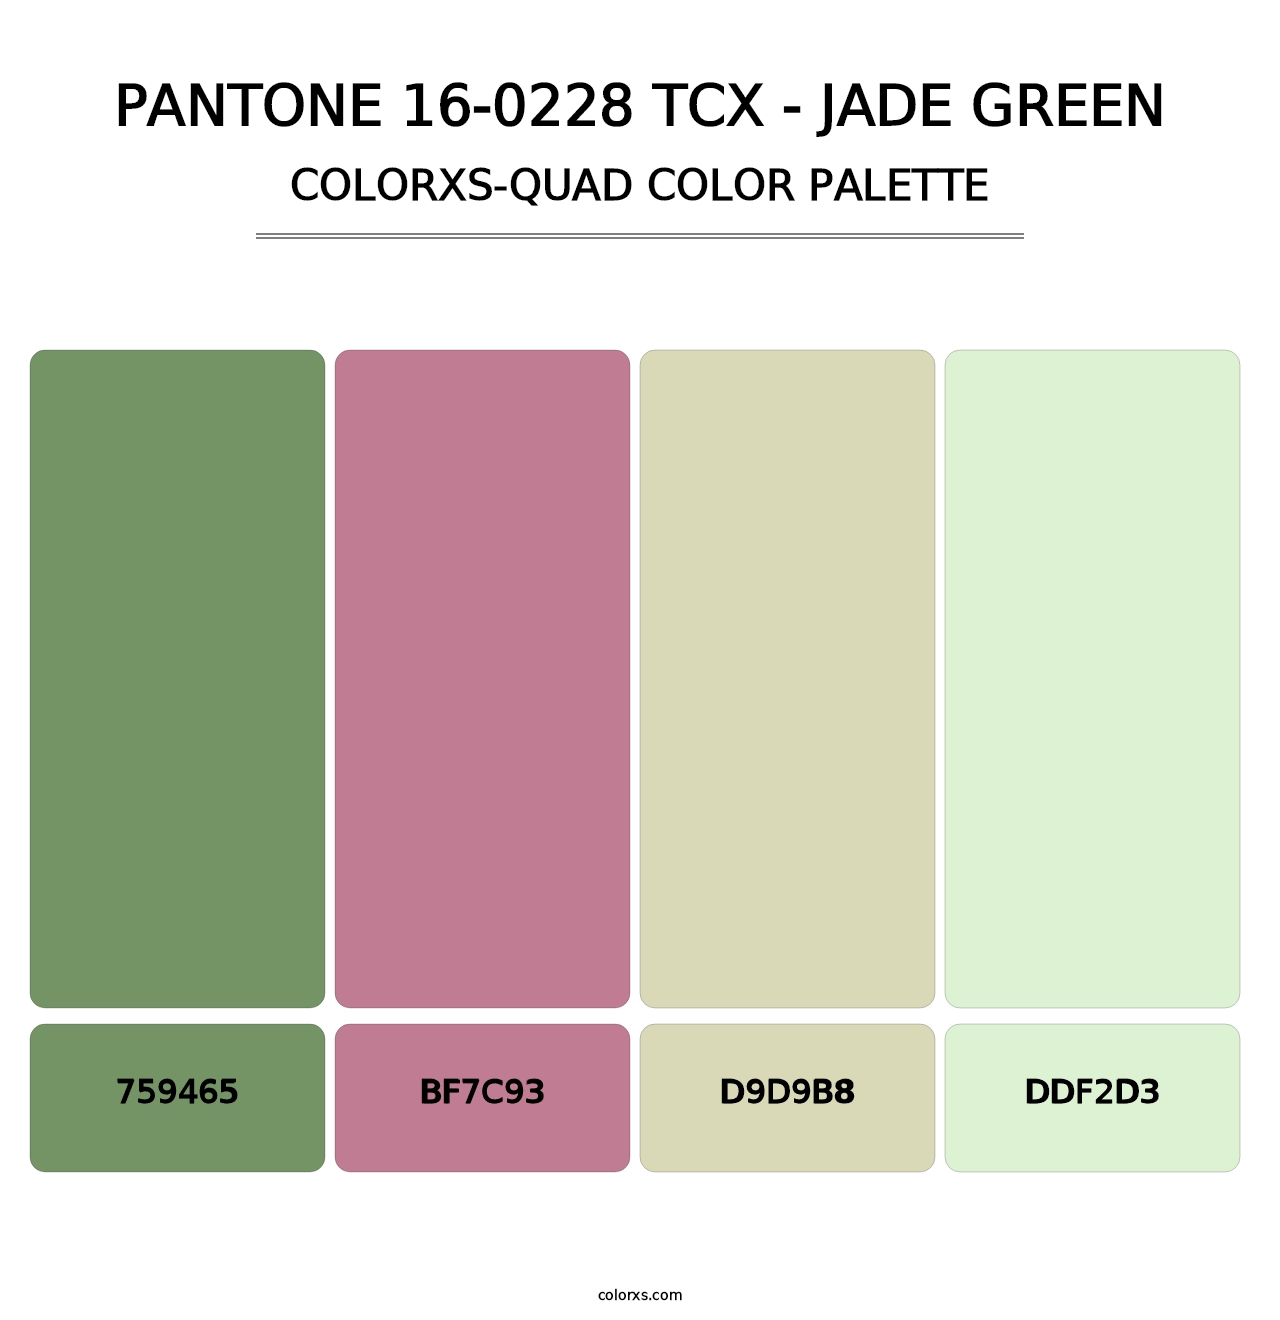 PANTONE 16-0228 TCX - Jade Green - Colorxs Quad Palette